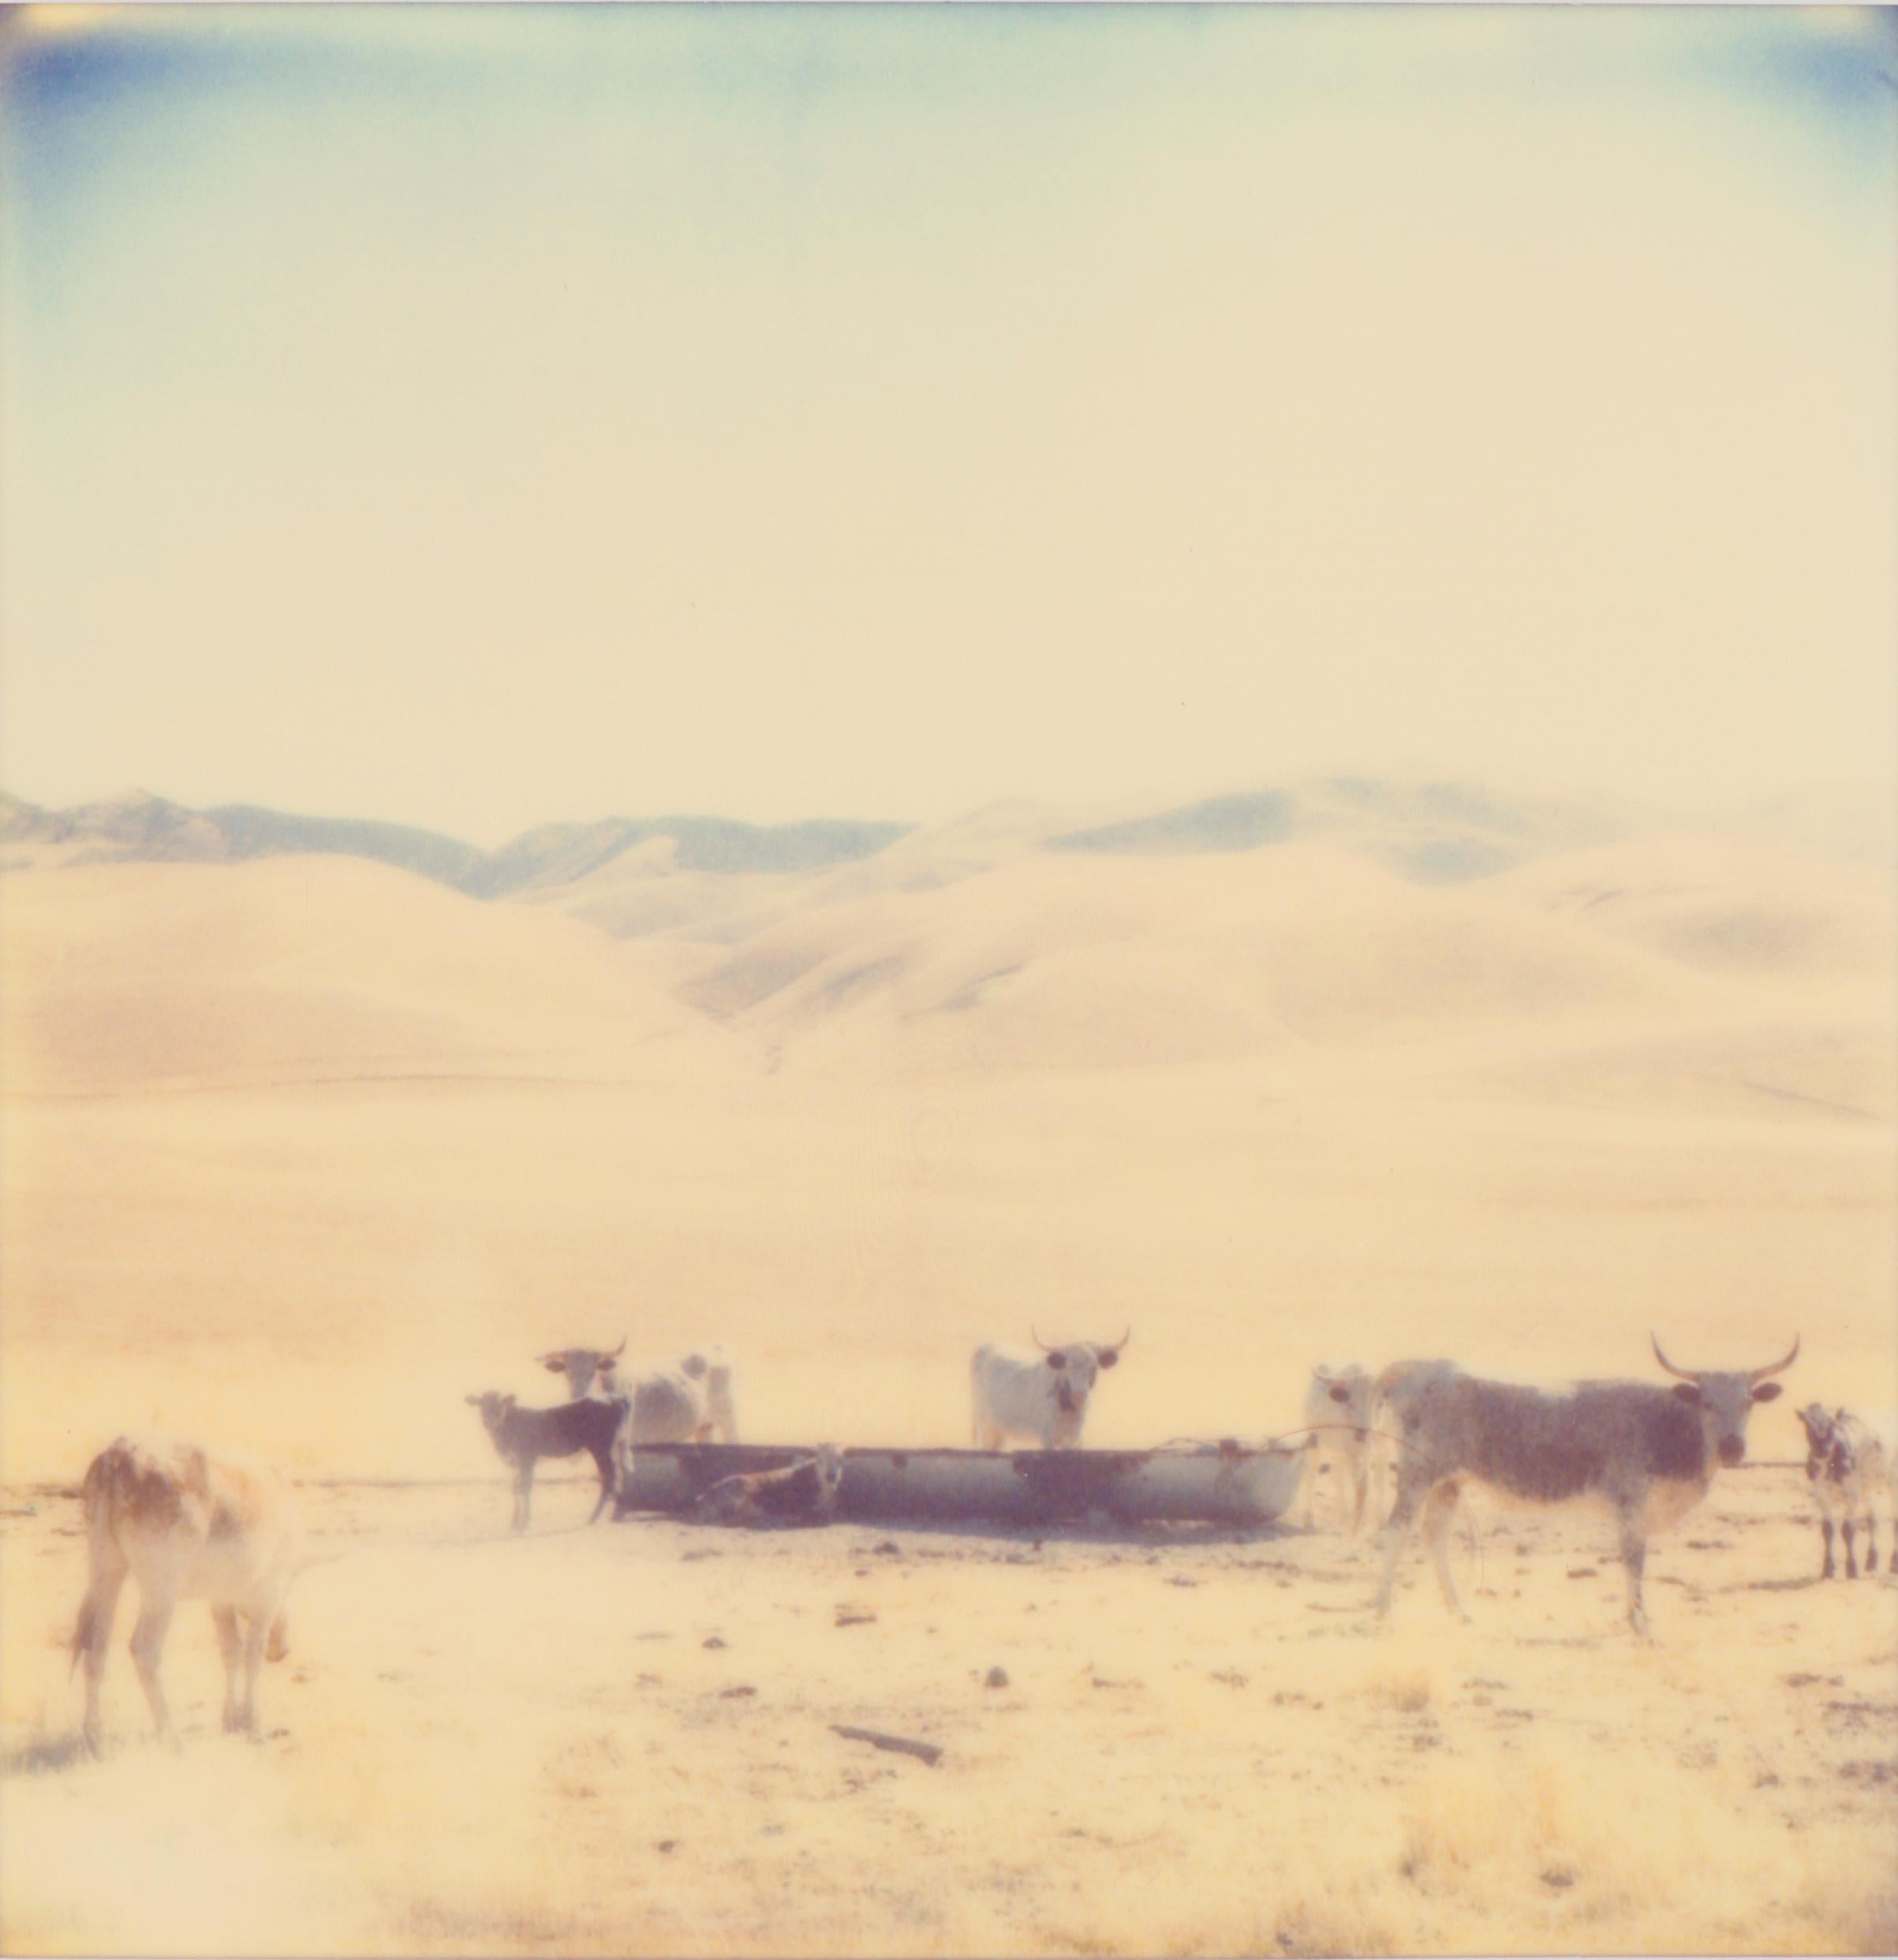 Oilfields, diptych - Contemporary, Polaroid, 20th Century, Color - Photograph by Stefanie Schneider